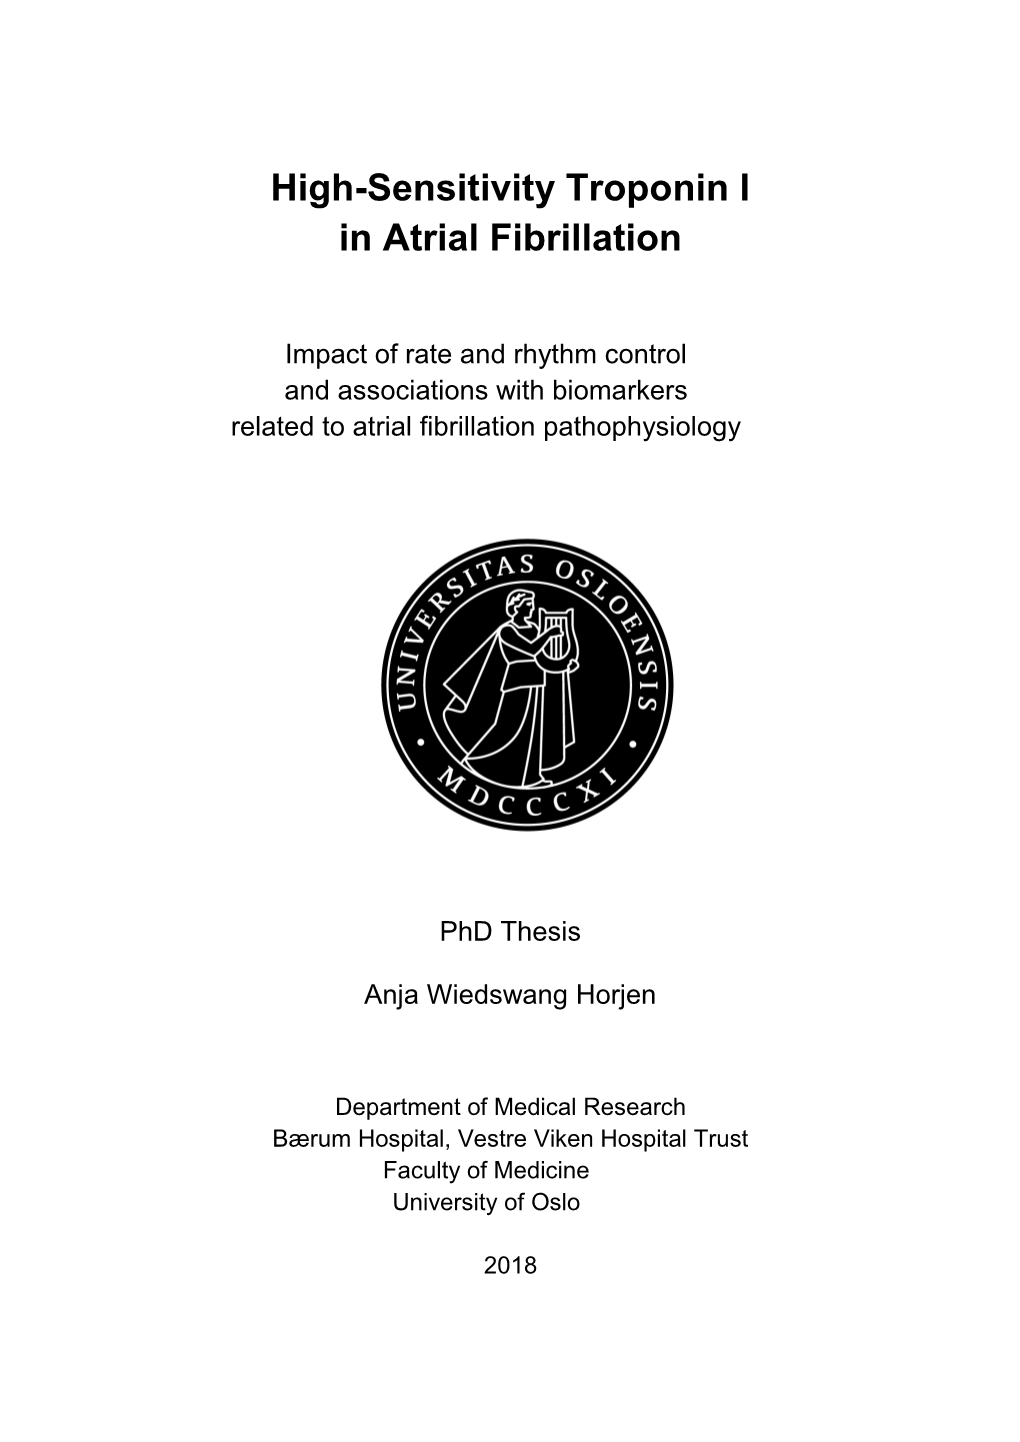 High-Sensitivity Troponin I in Atrial Fibrillation